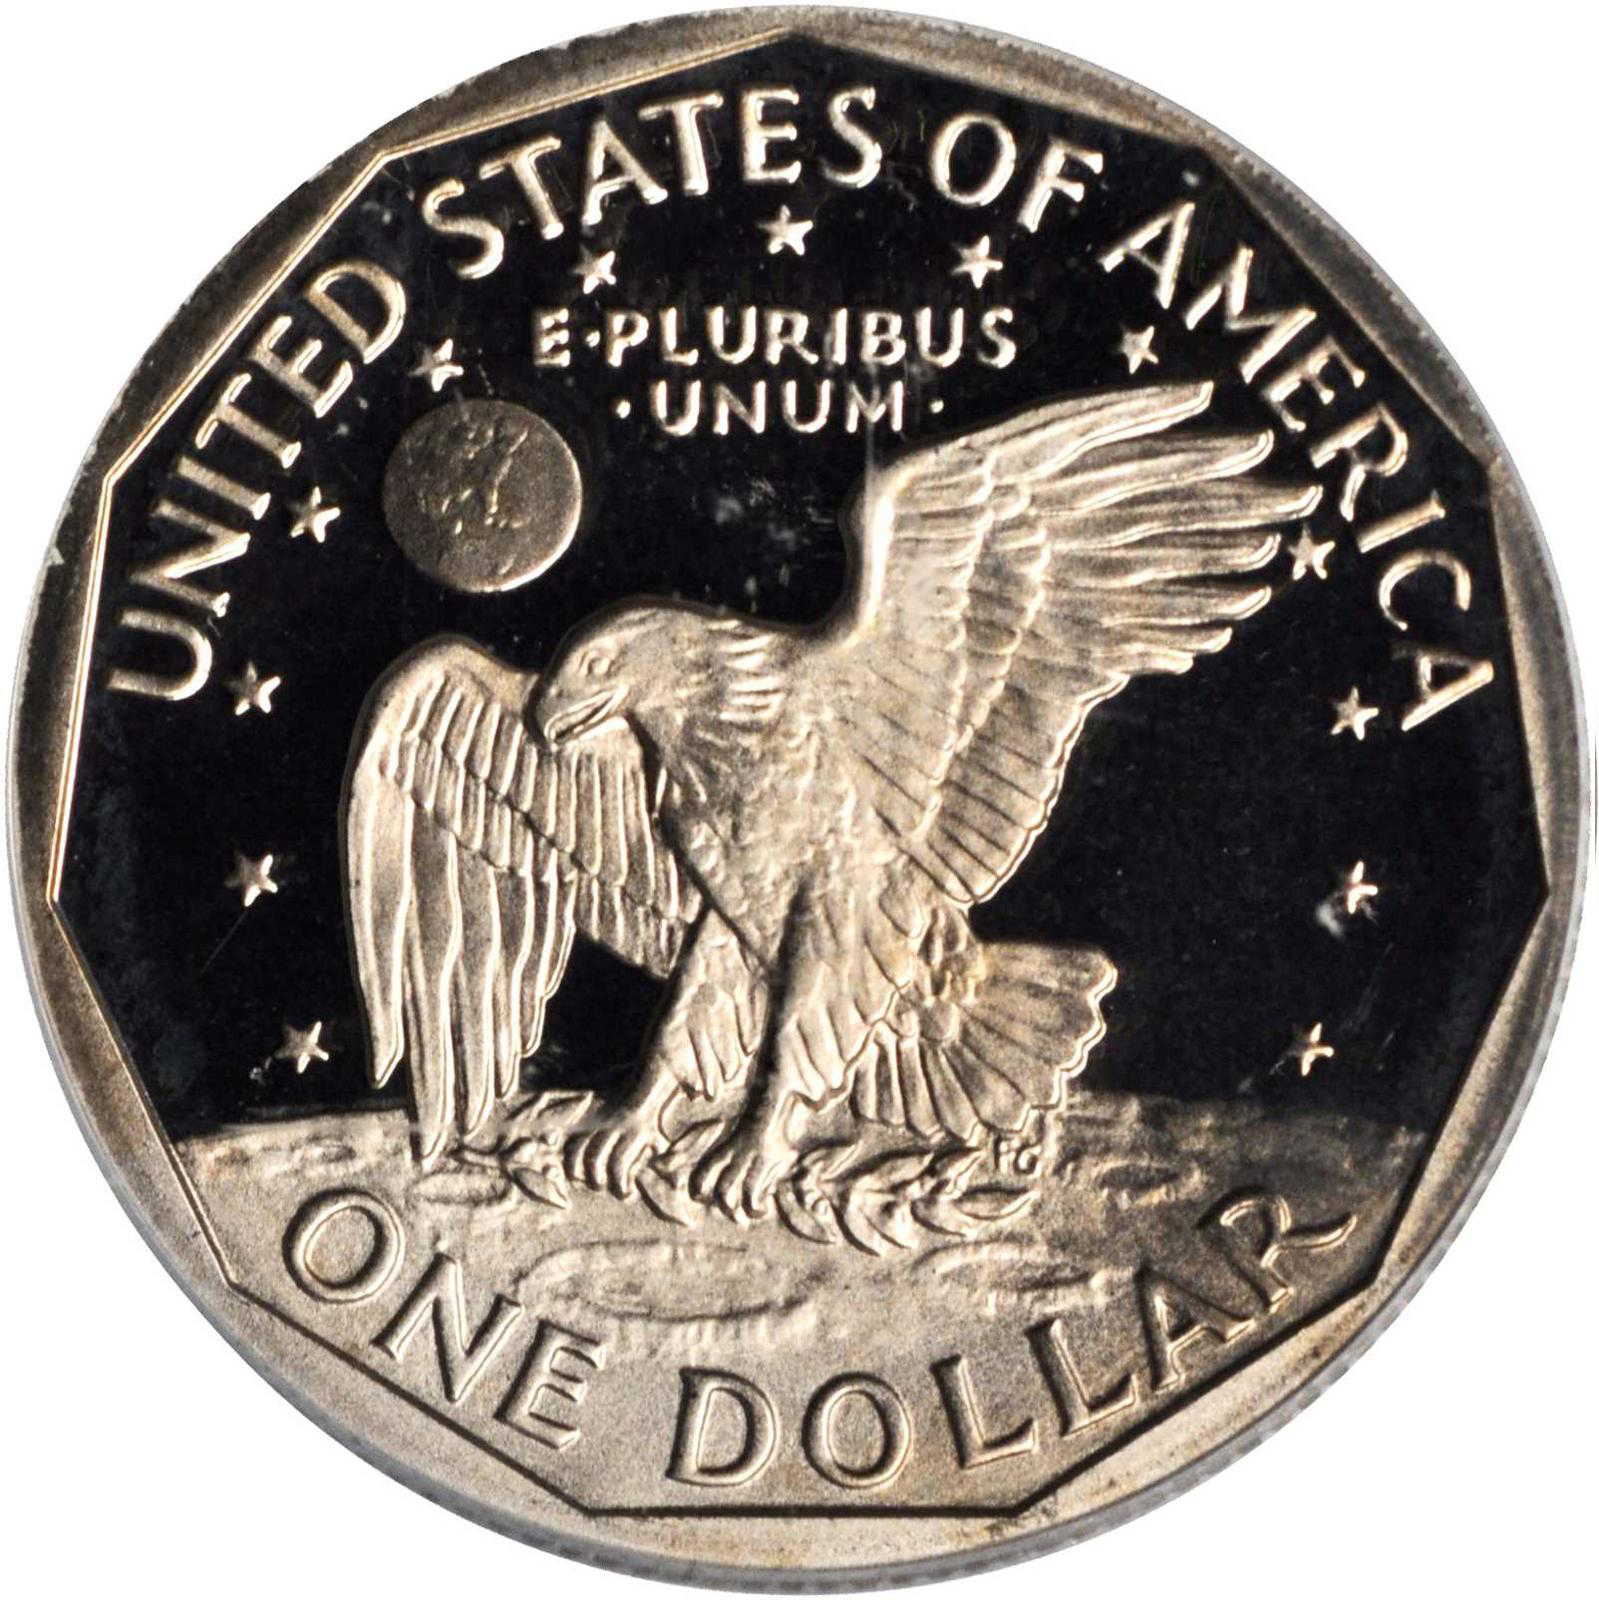 United States Of America E Pluribus Unum One Dollar Coin 1979 - New Dollar Wallpaper ...1599 x 1600